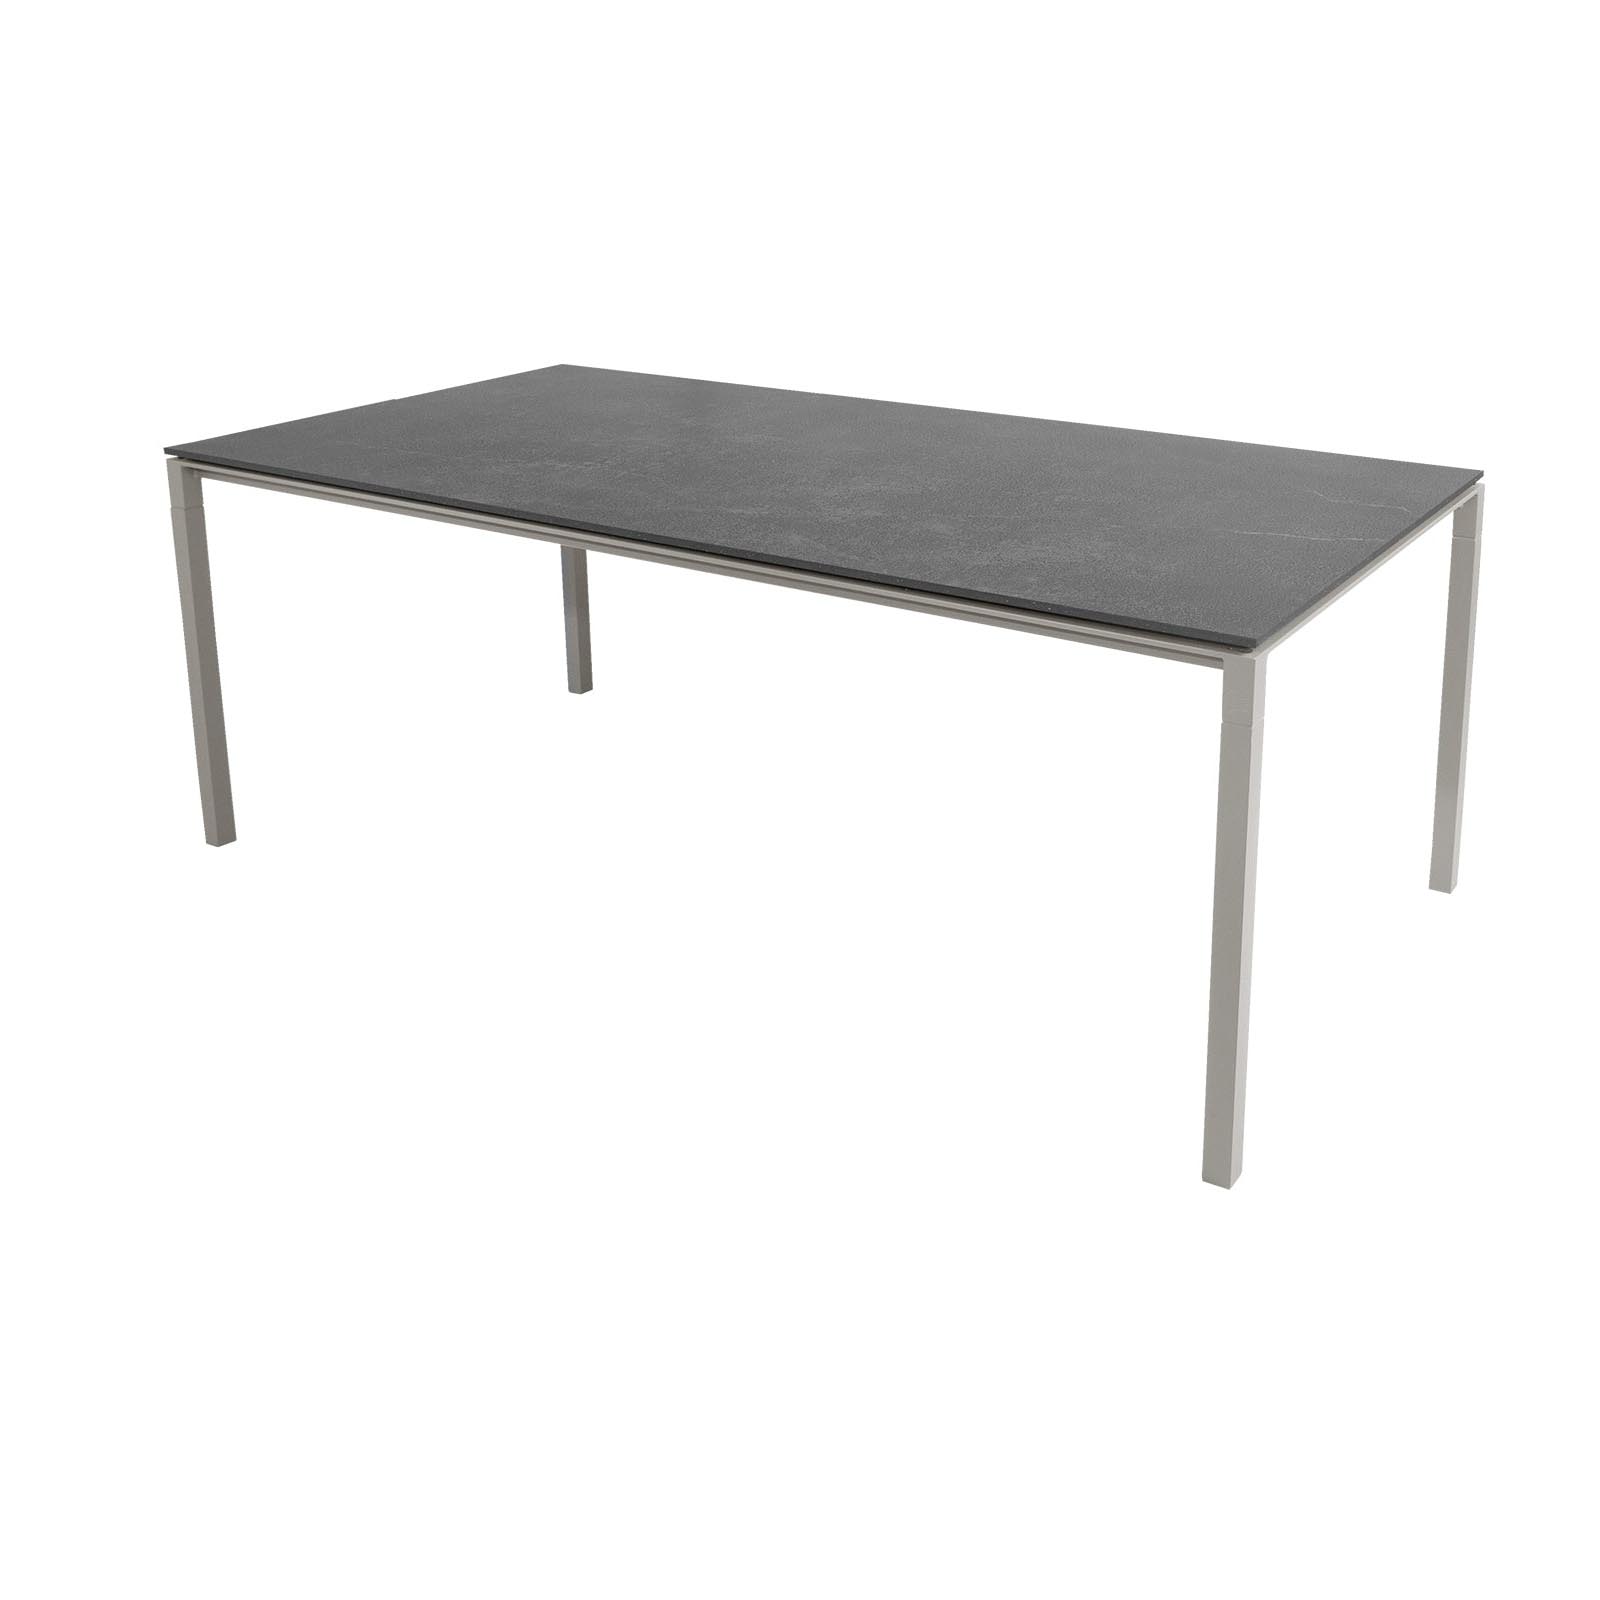 Pure Tisch in 200x100 cm aus Aluminium in Taupe mit Tischplatte aus Ceramic in Fossil Black